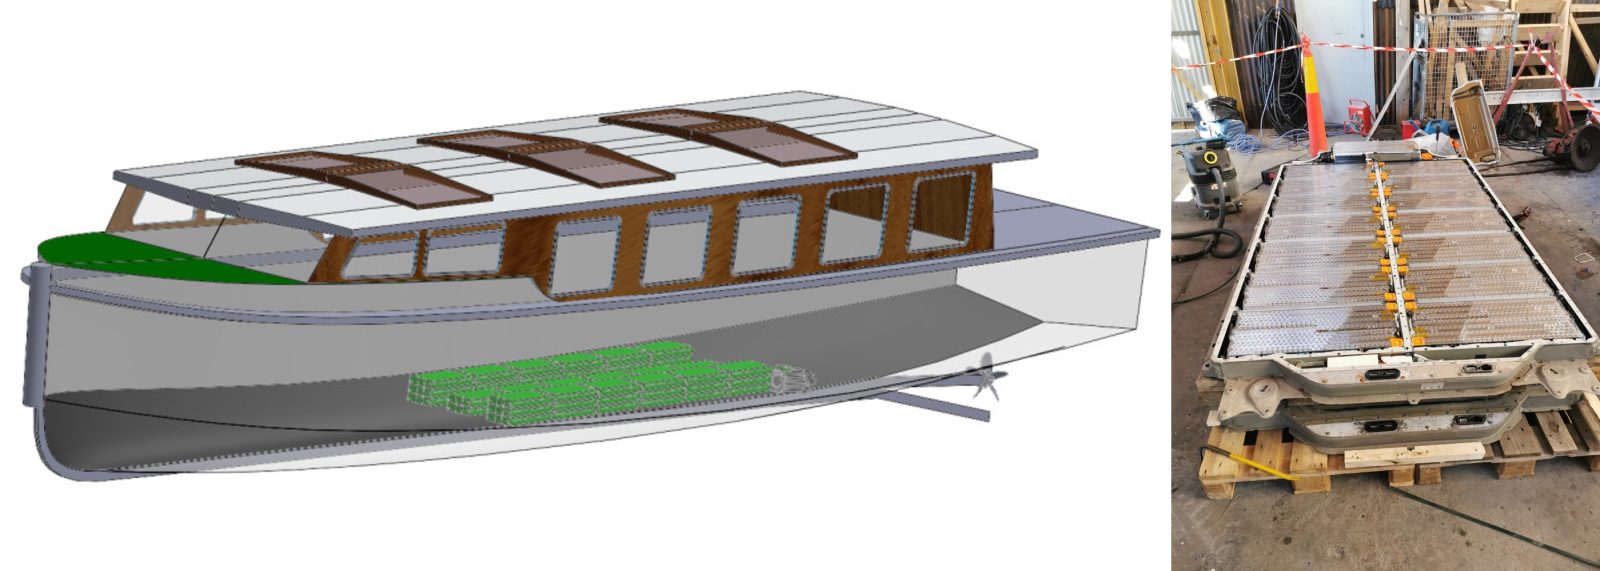 Tesla batteries to power a passenger boat | Electrek